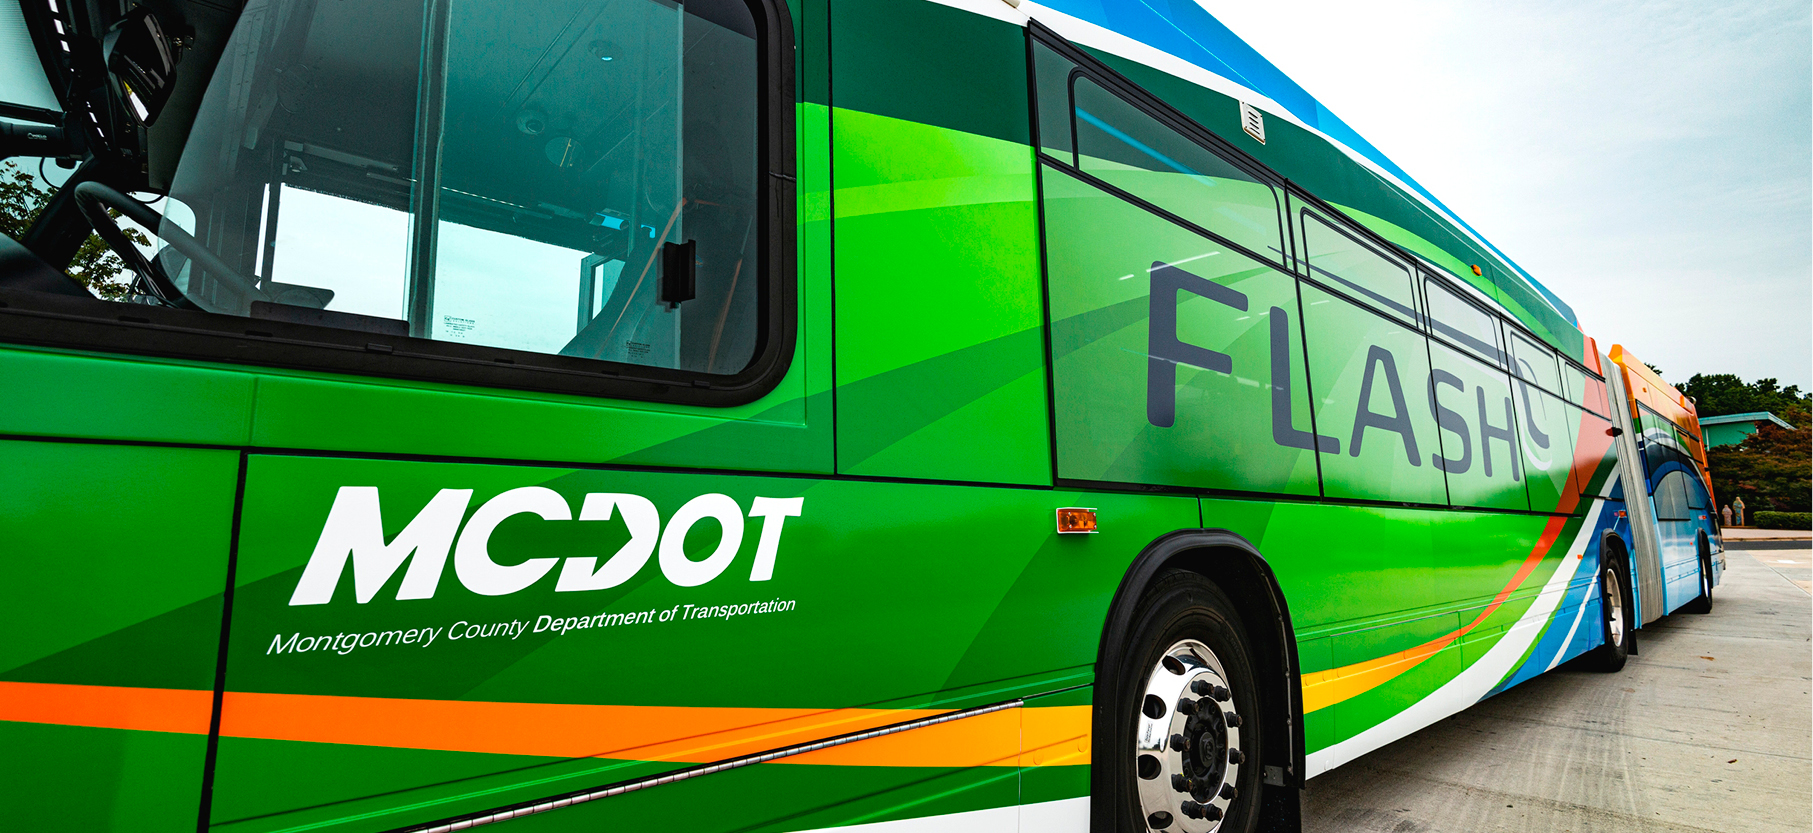 MCDOT Flash Bus